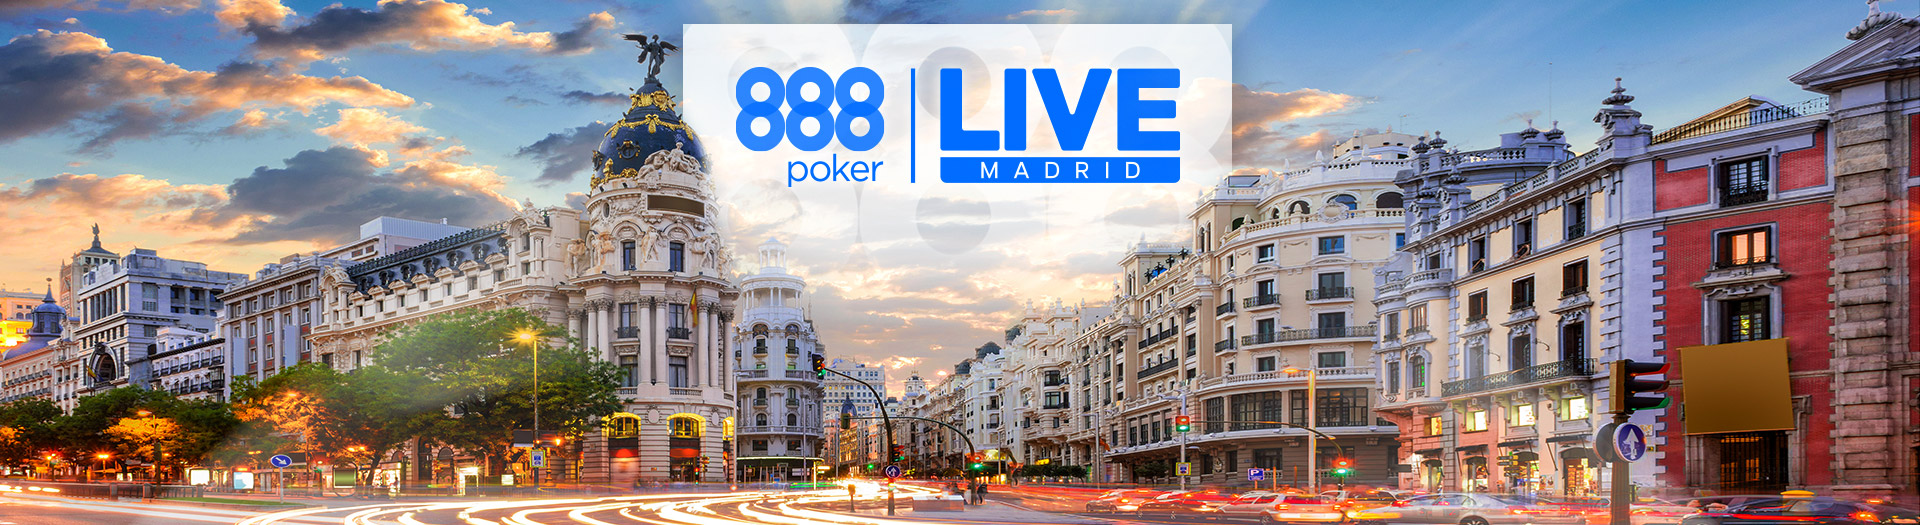 TS-39001-Live-Madrid-main-image_LP-1669193391684_tcm1530-572785